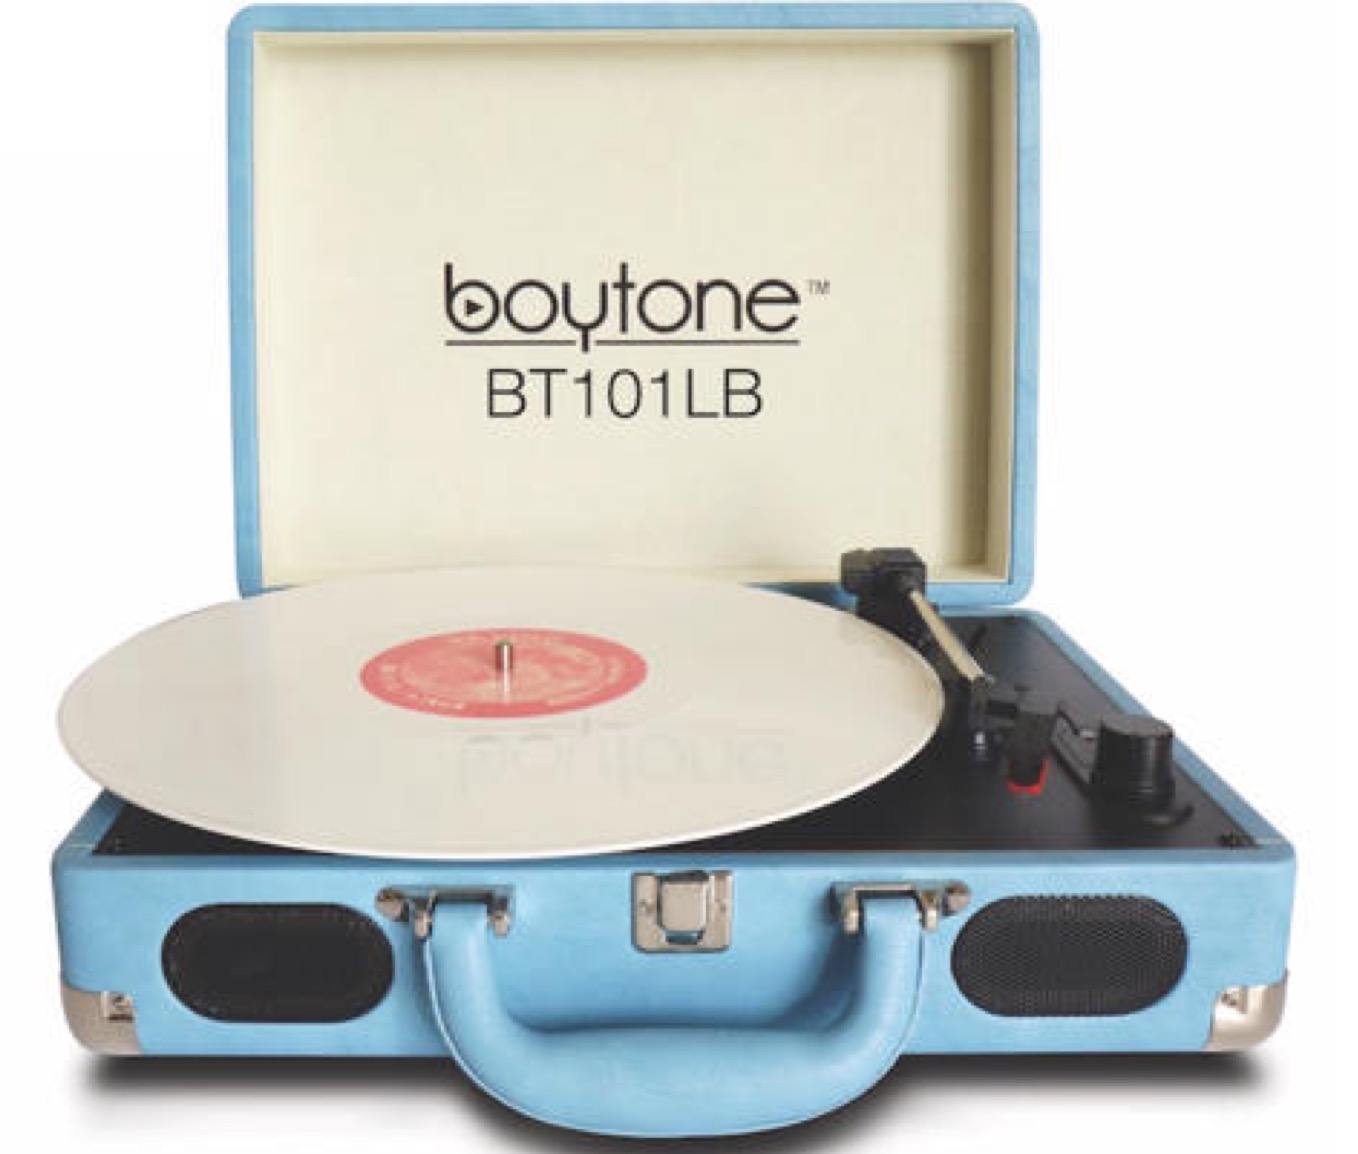 Boytone Mobile Suitcase Multi RPM Turntable BT-101TBGR Record Player Grey AC-DC 